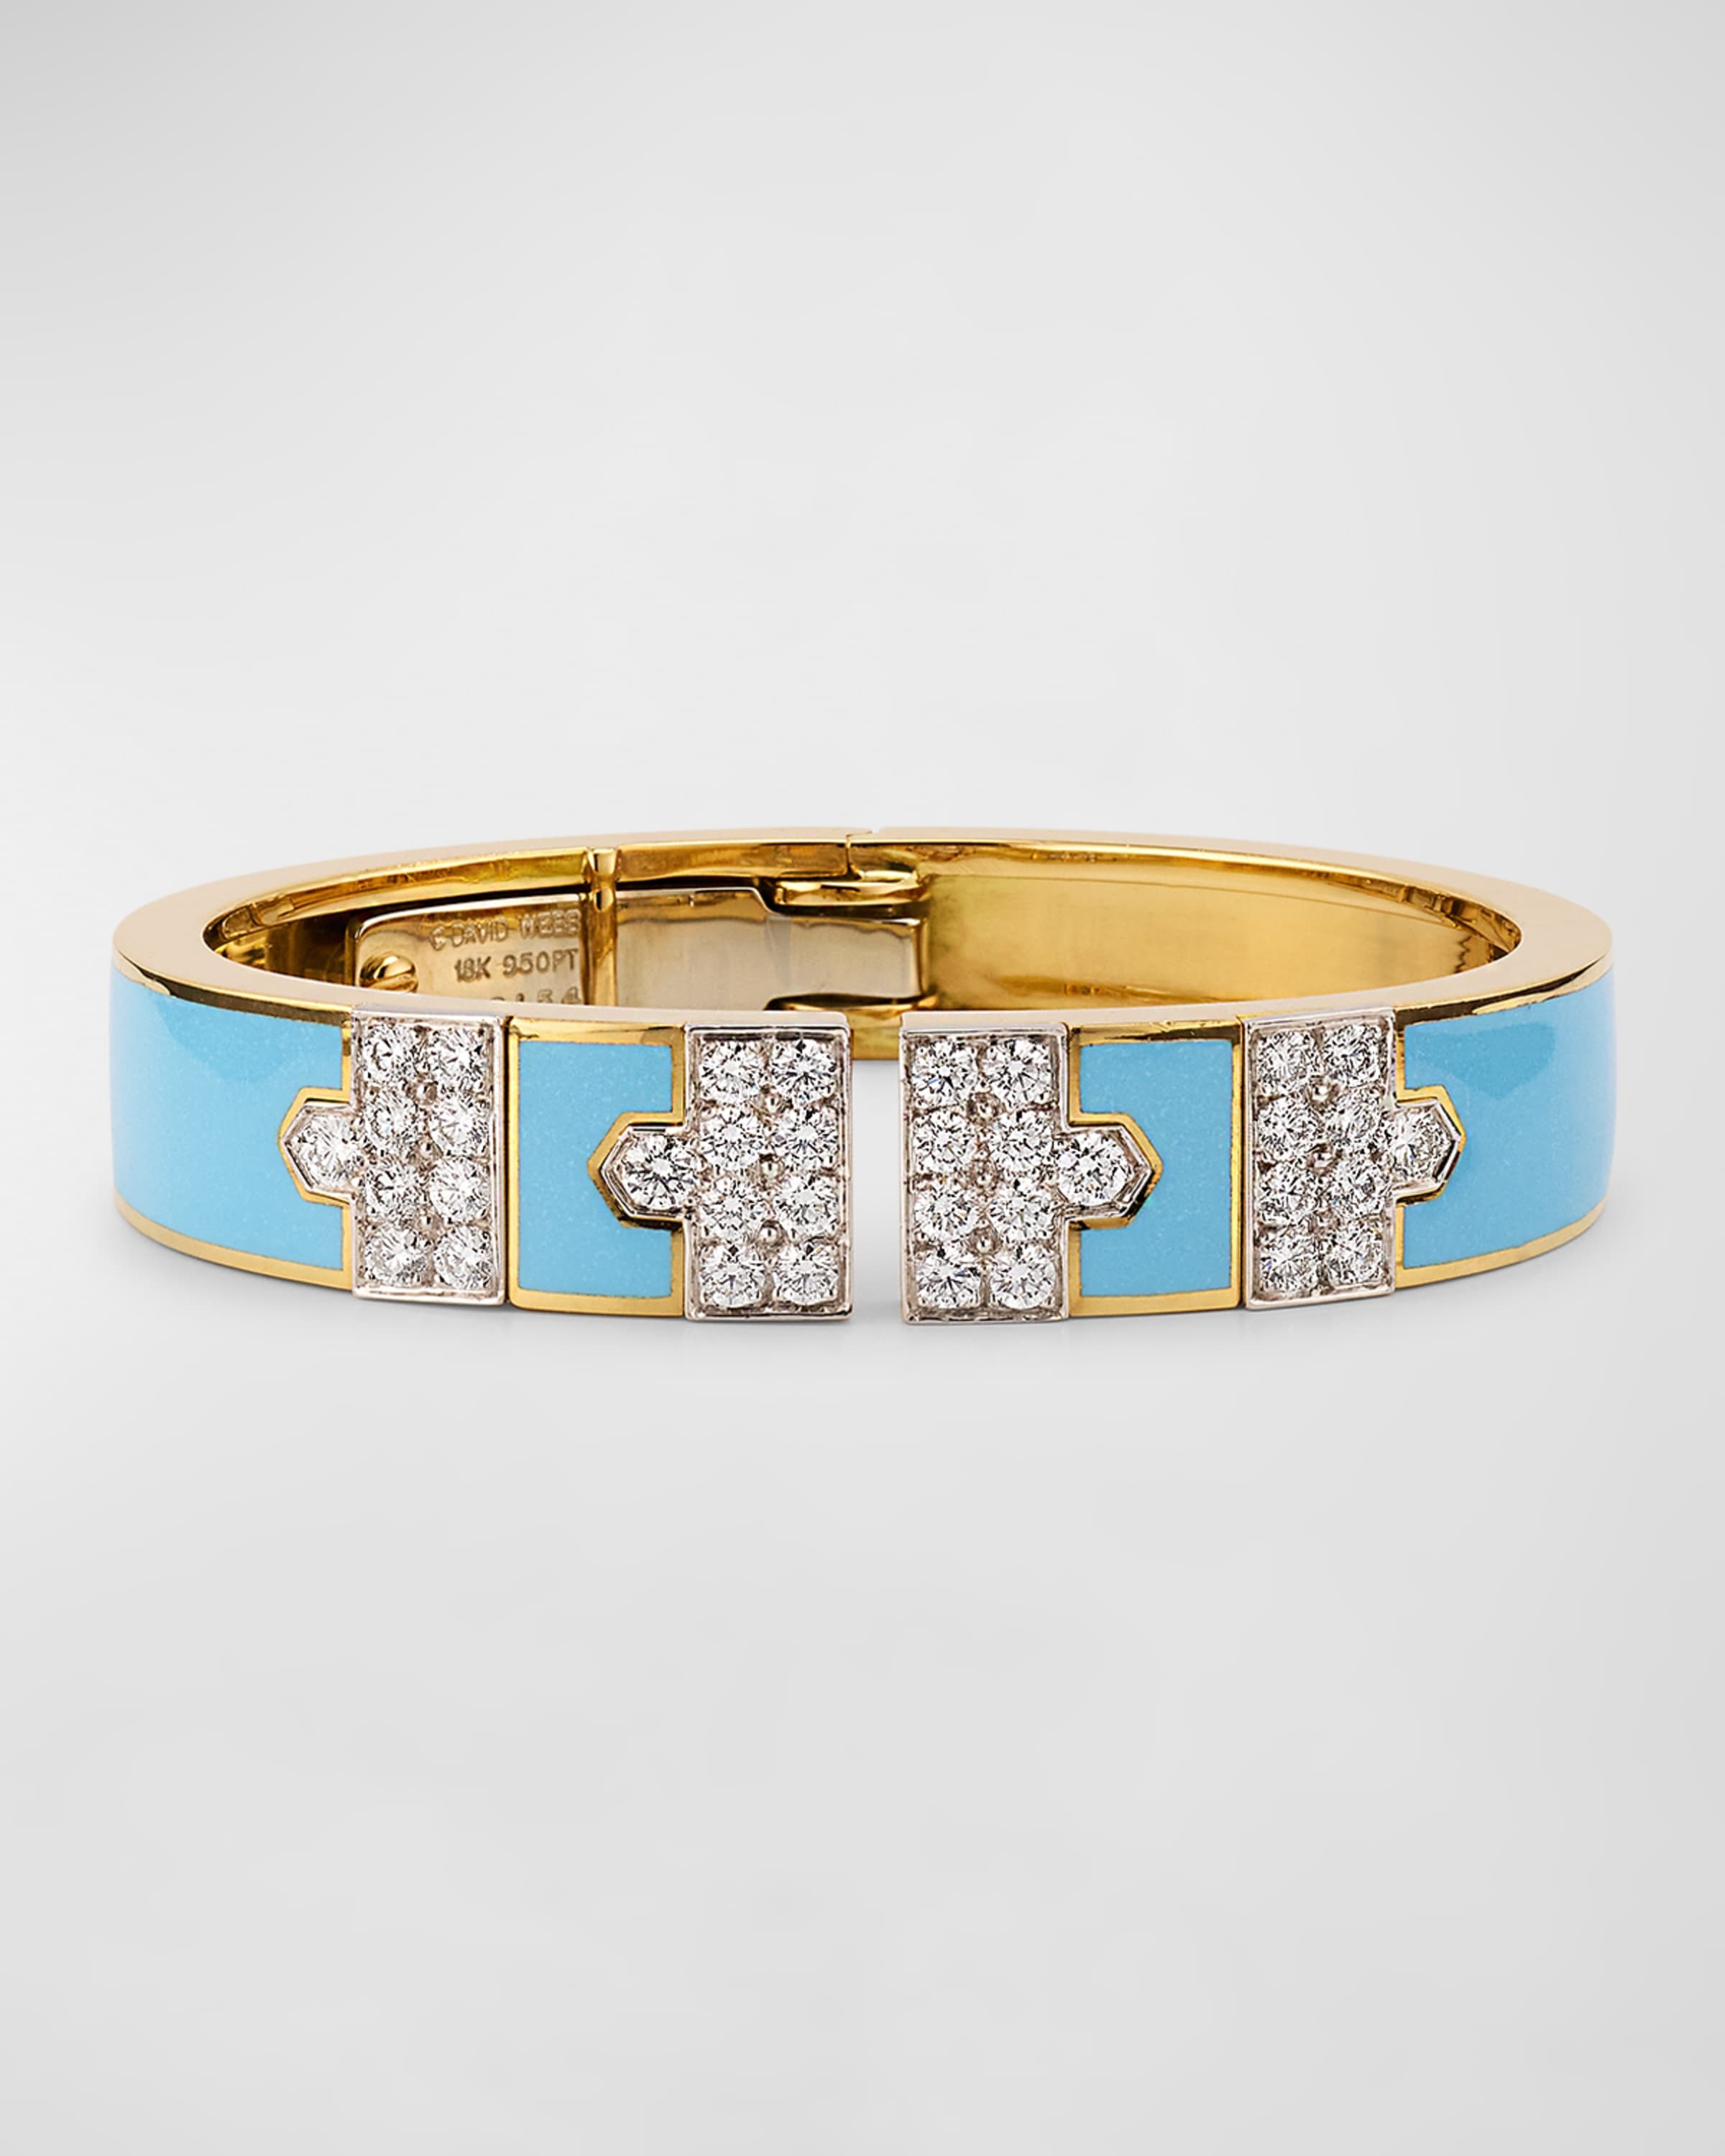 18K Yellow Gold and Platinum Lane Bracelet with Light Blue Enamel - 1